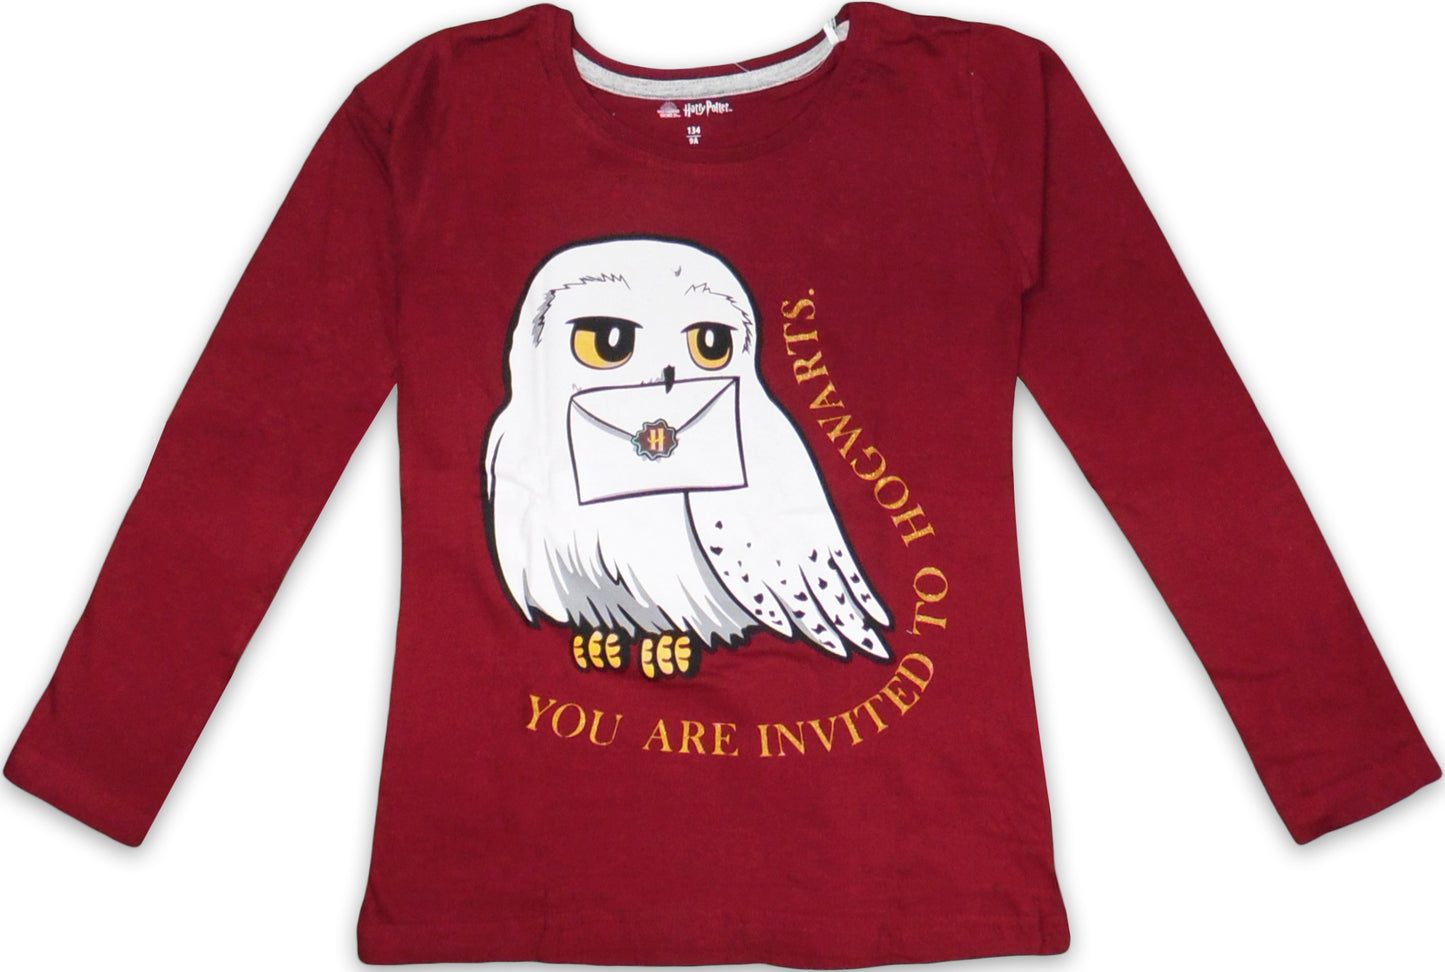 Authentic Harry Potter Hedwig Girls Cotton Pyjama Set